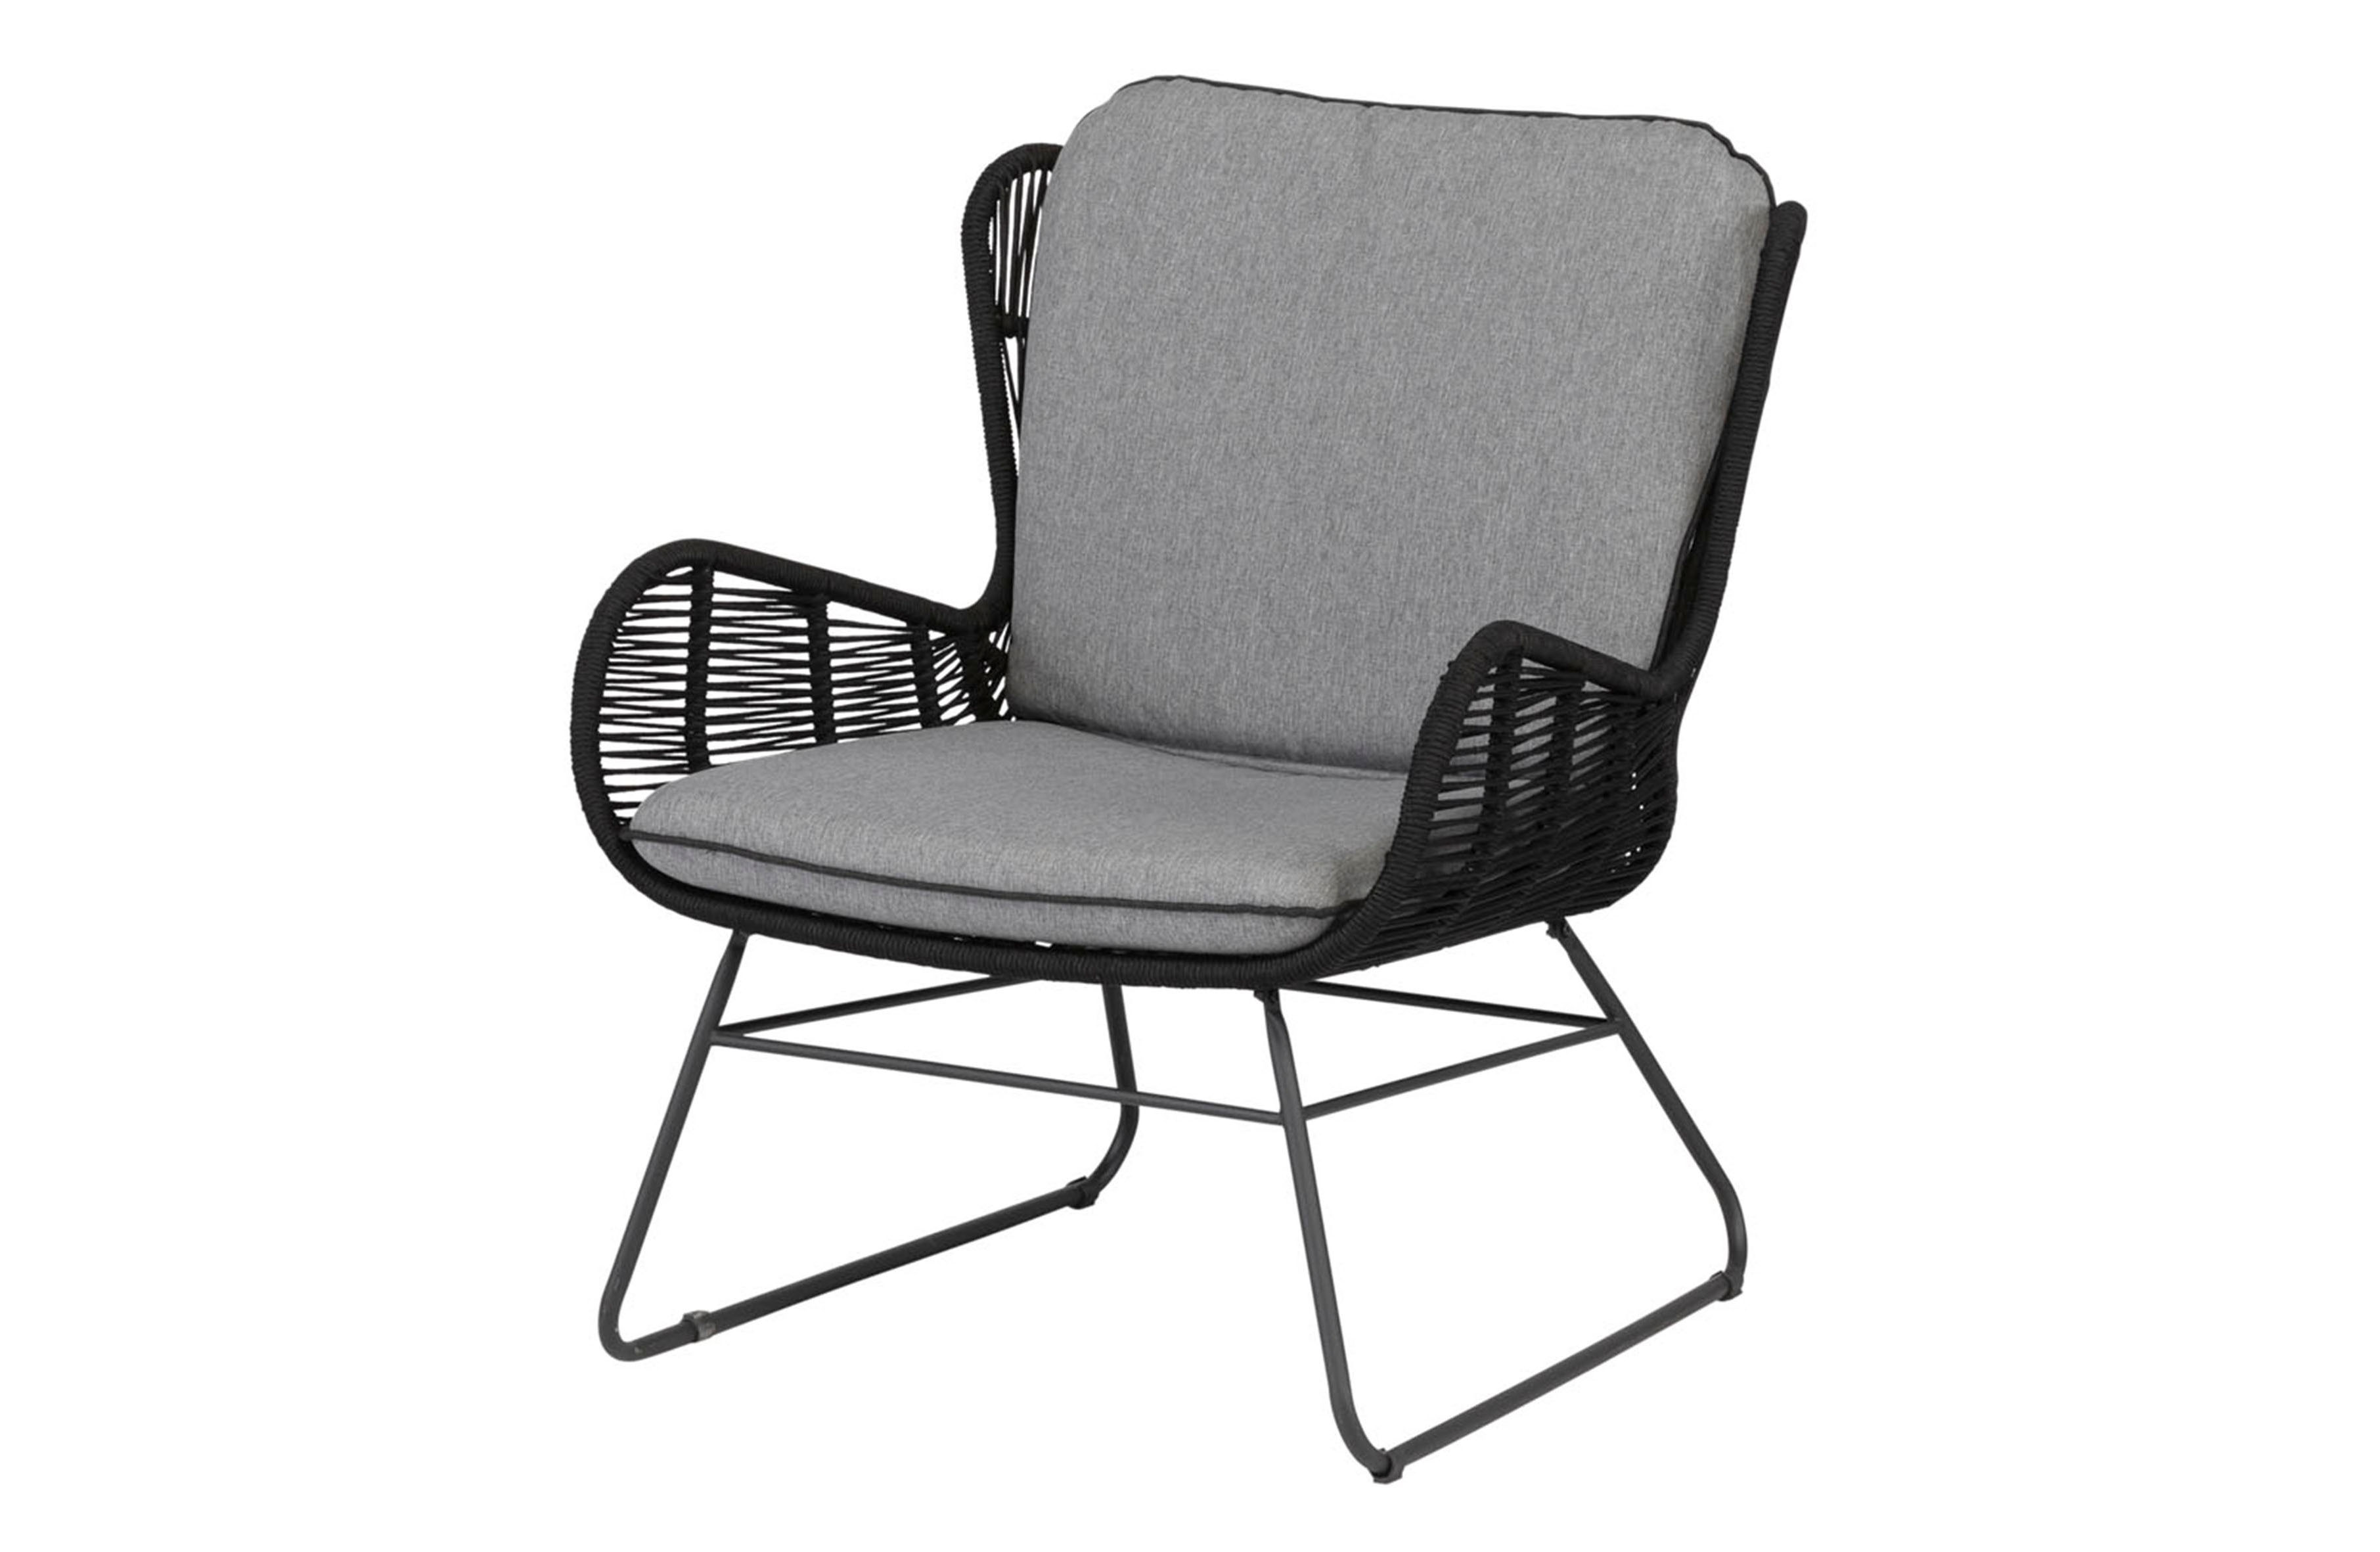 EXOTAN Grace loungestol, m. armlæn - antracitgrå stof, reb og stål